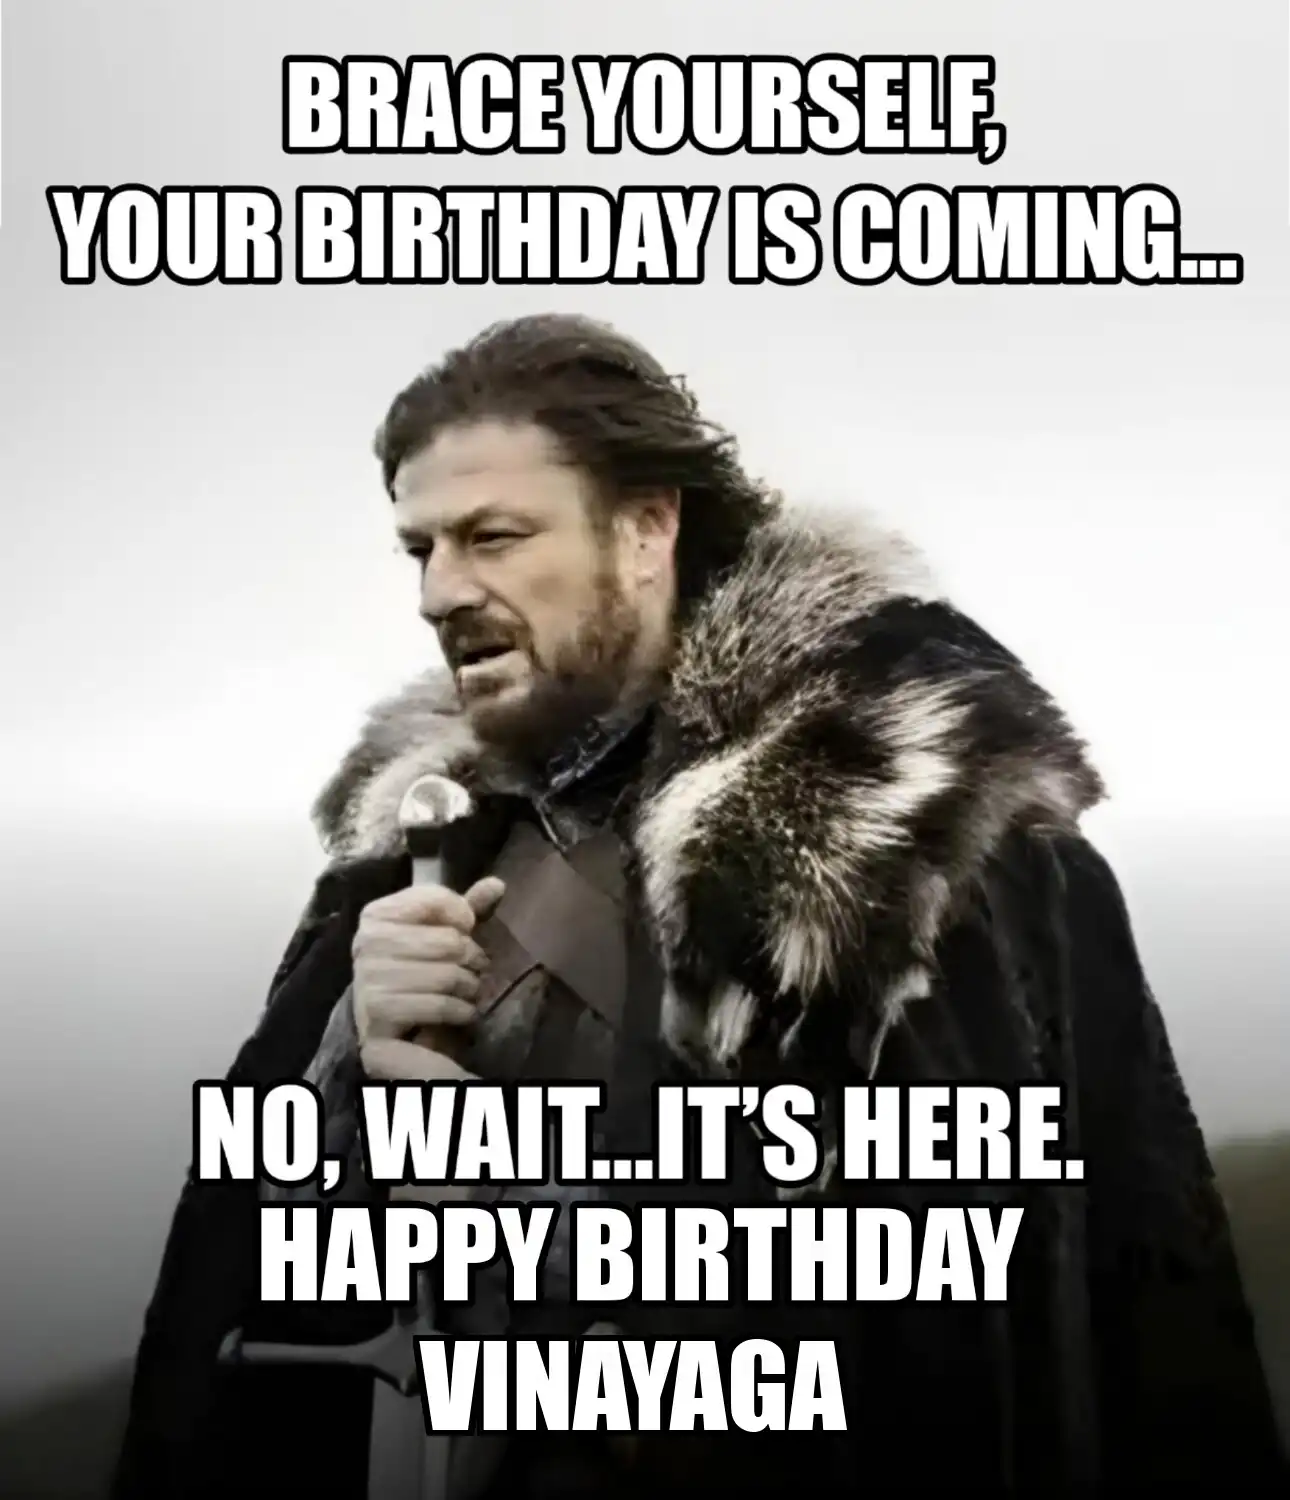 Happy Birthday Vinayaga Brace Yourself Your Birthday Is Coming Meme